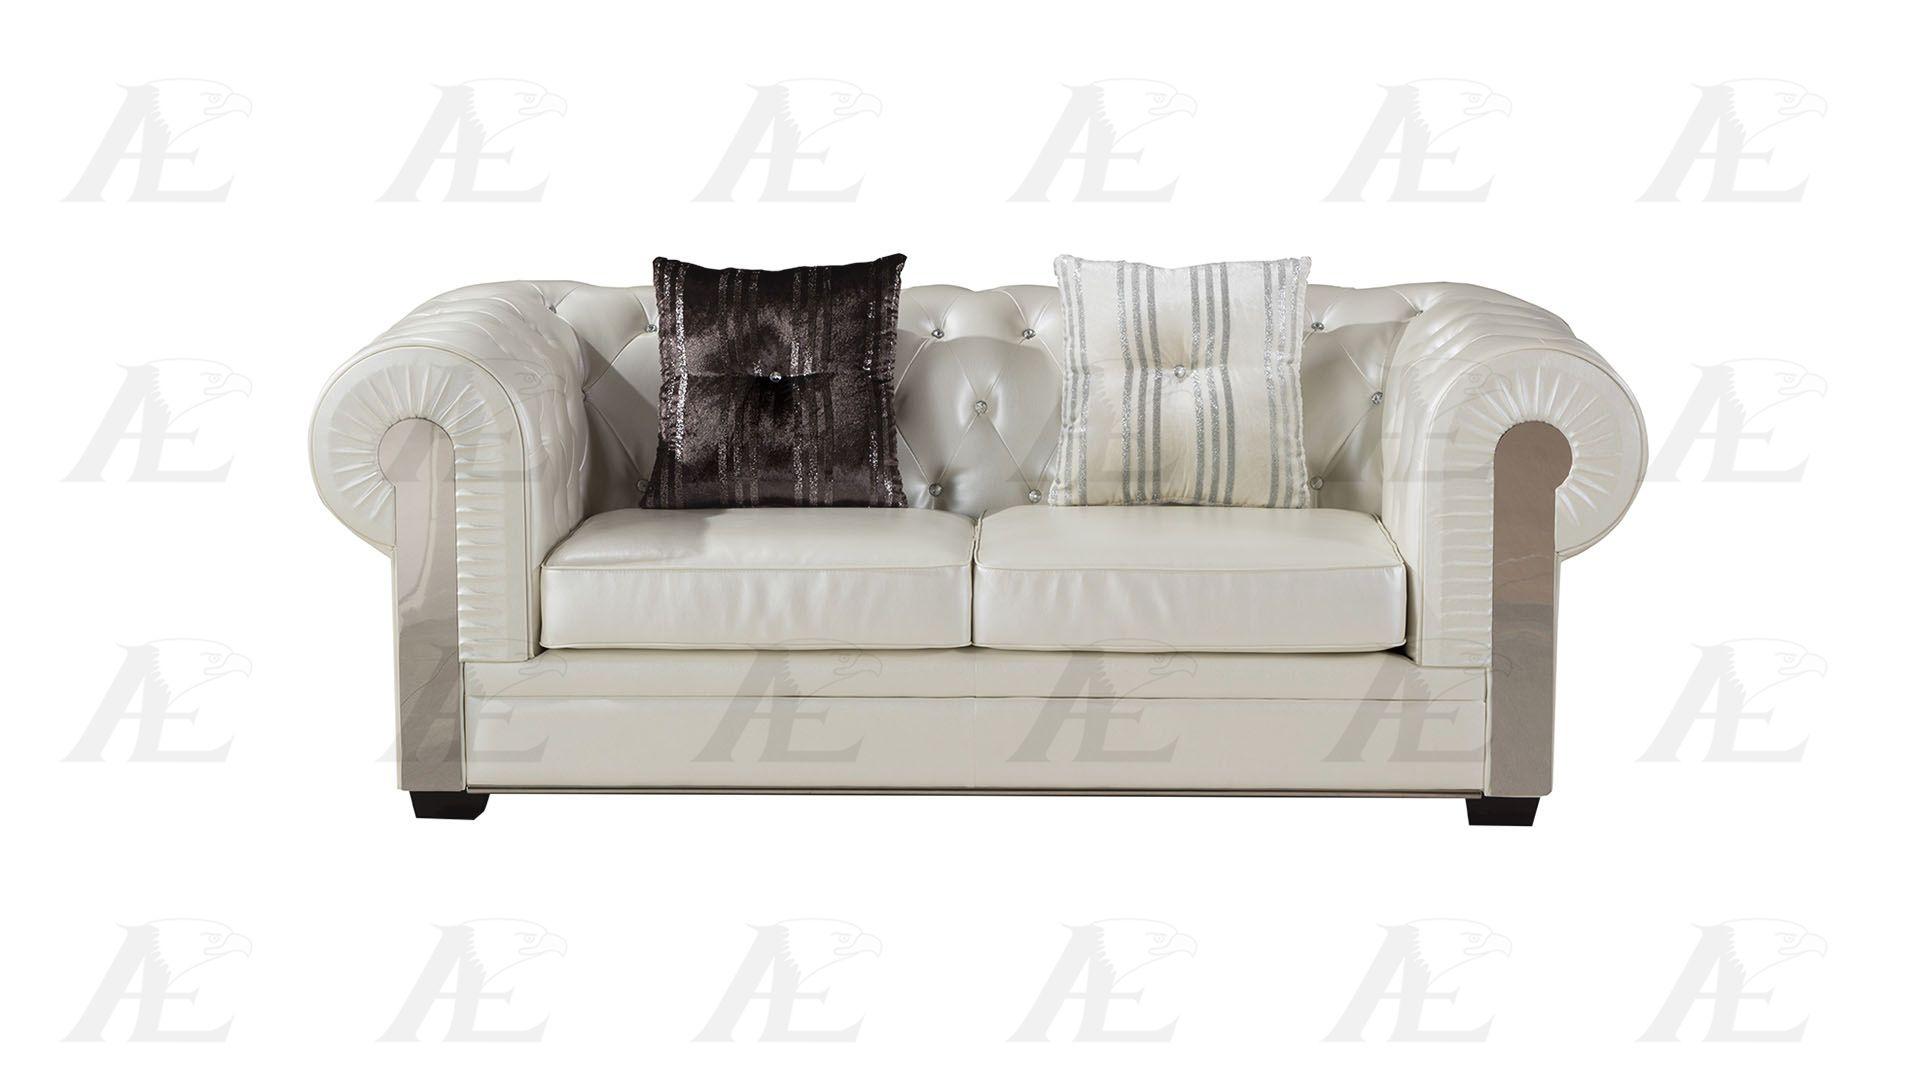 

                    
American Eagle Furniture AE2608-IV Sofa and Loveseat Cream Bonded Leather Purchase 
